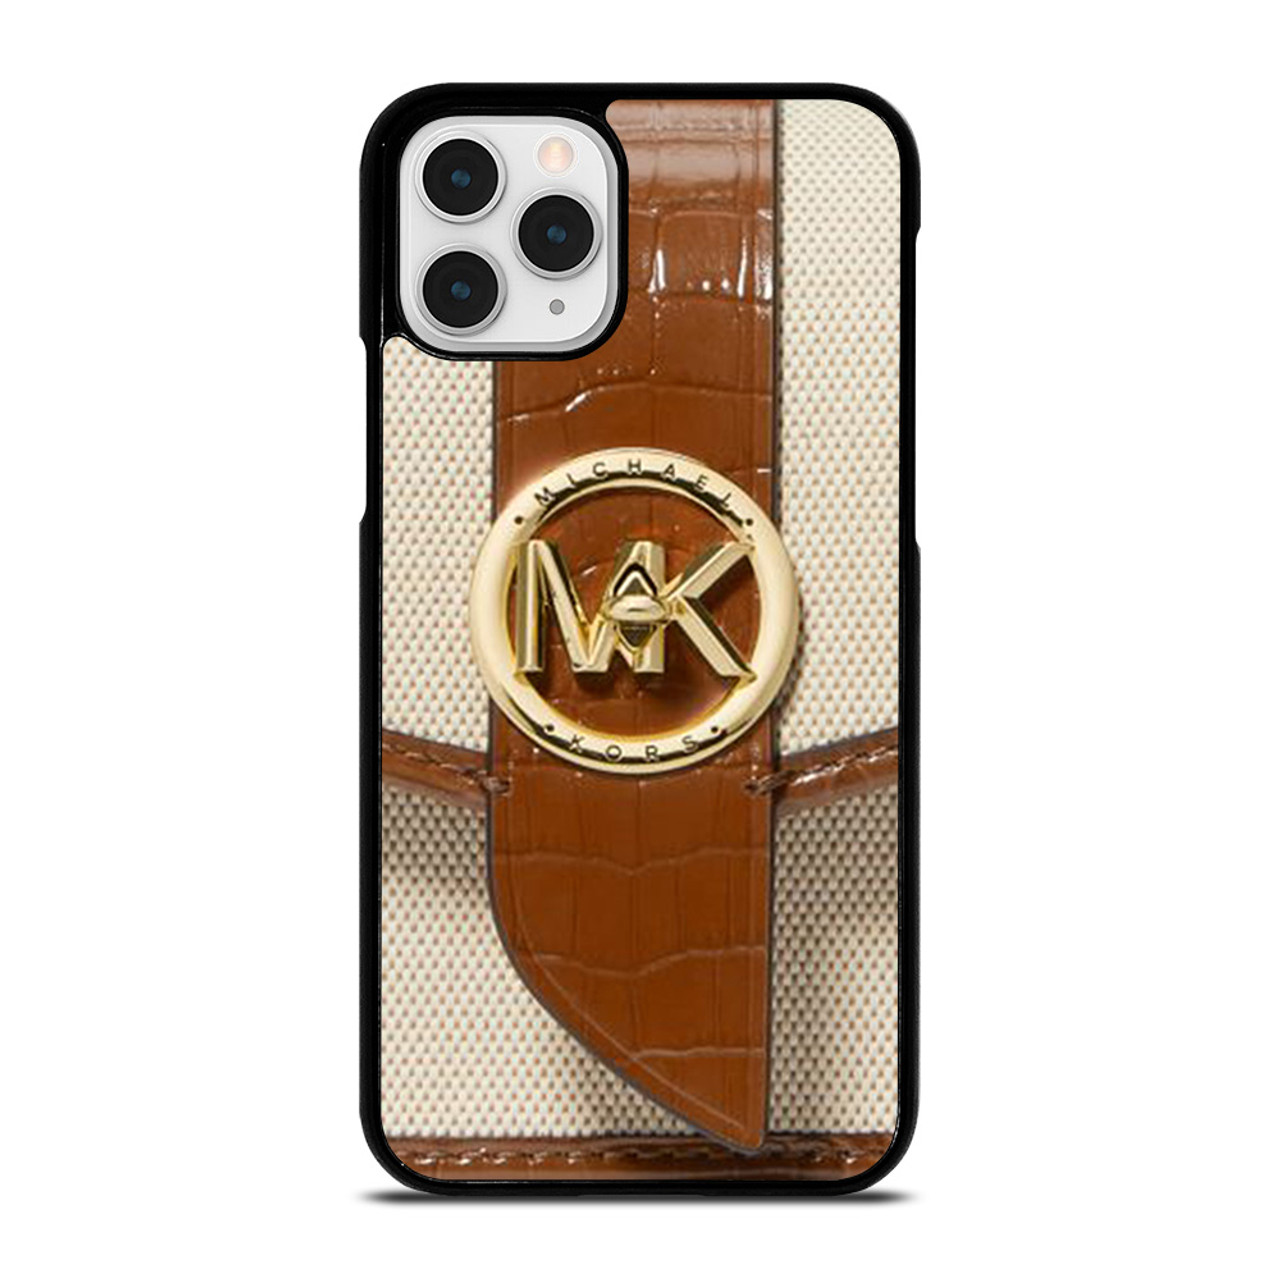 MICHAEL KORS LOGO MK HAND BAG EMBLEM iPhone 11 Pro Case Cover